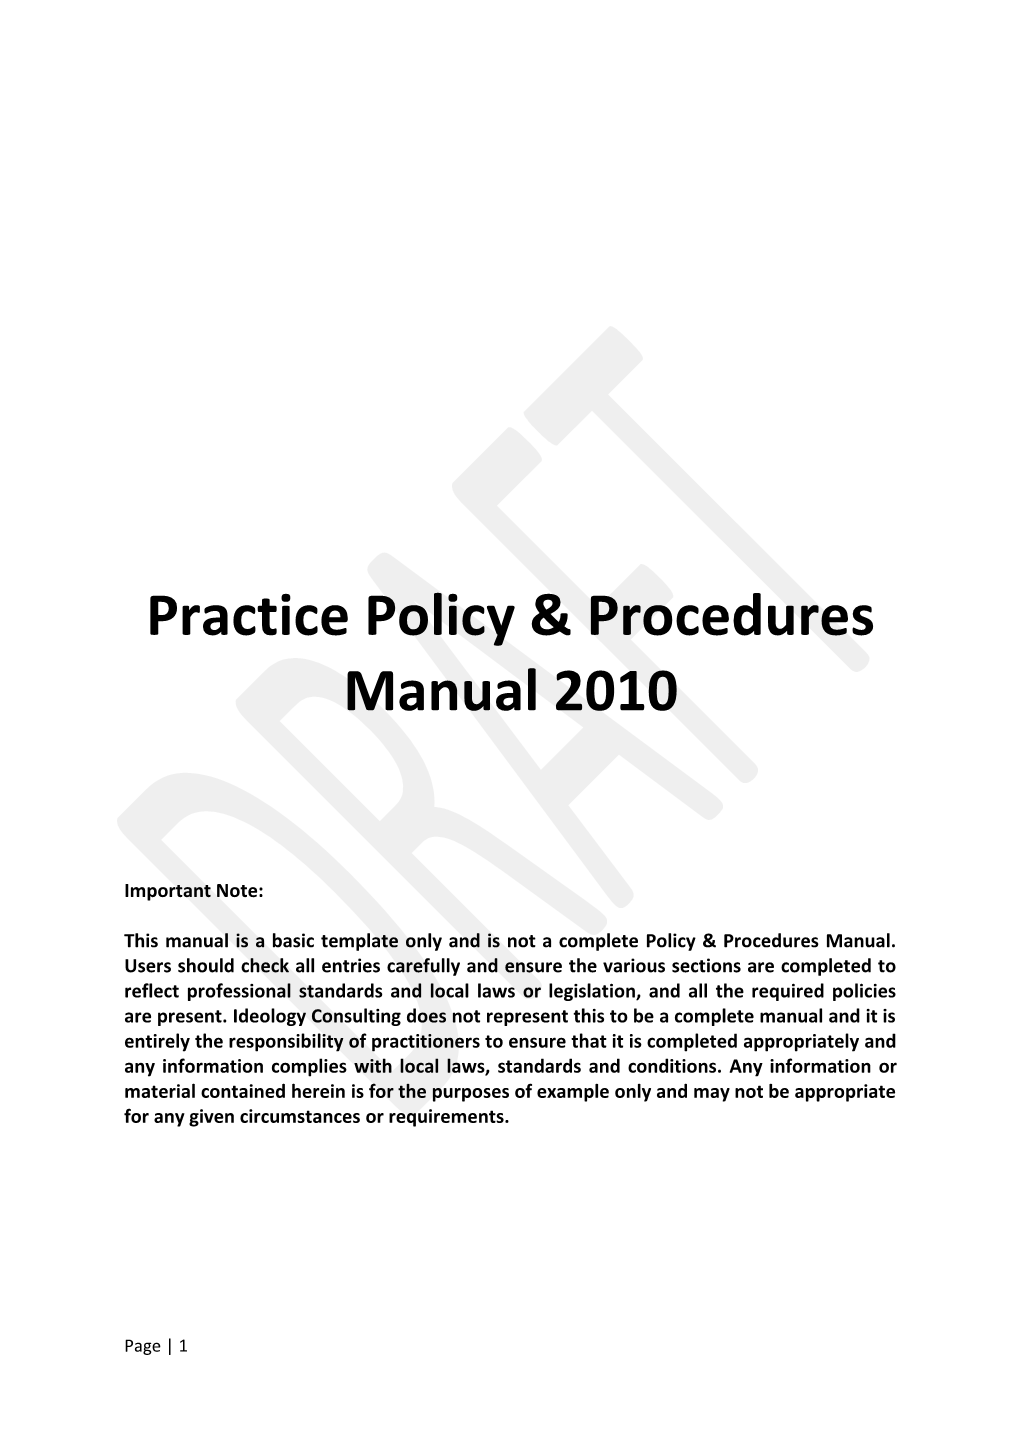 Practice Policy & Procedures Manual2010